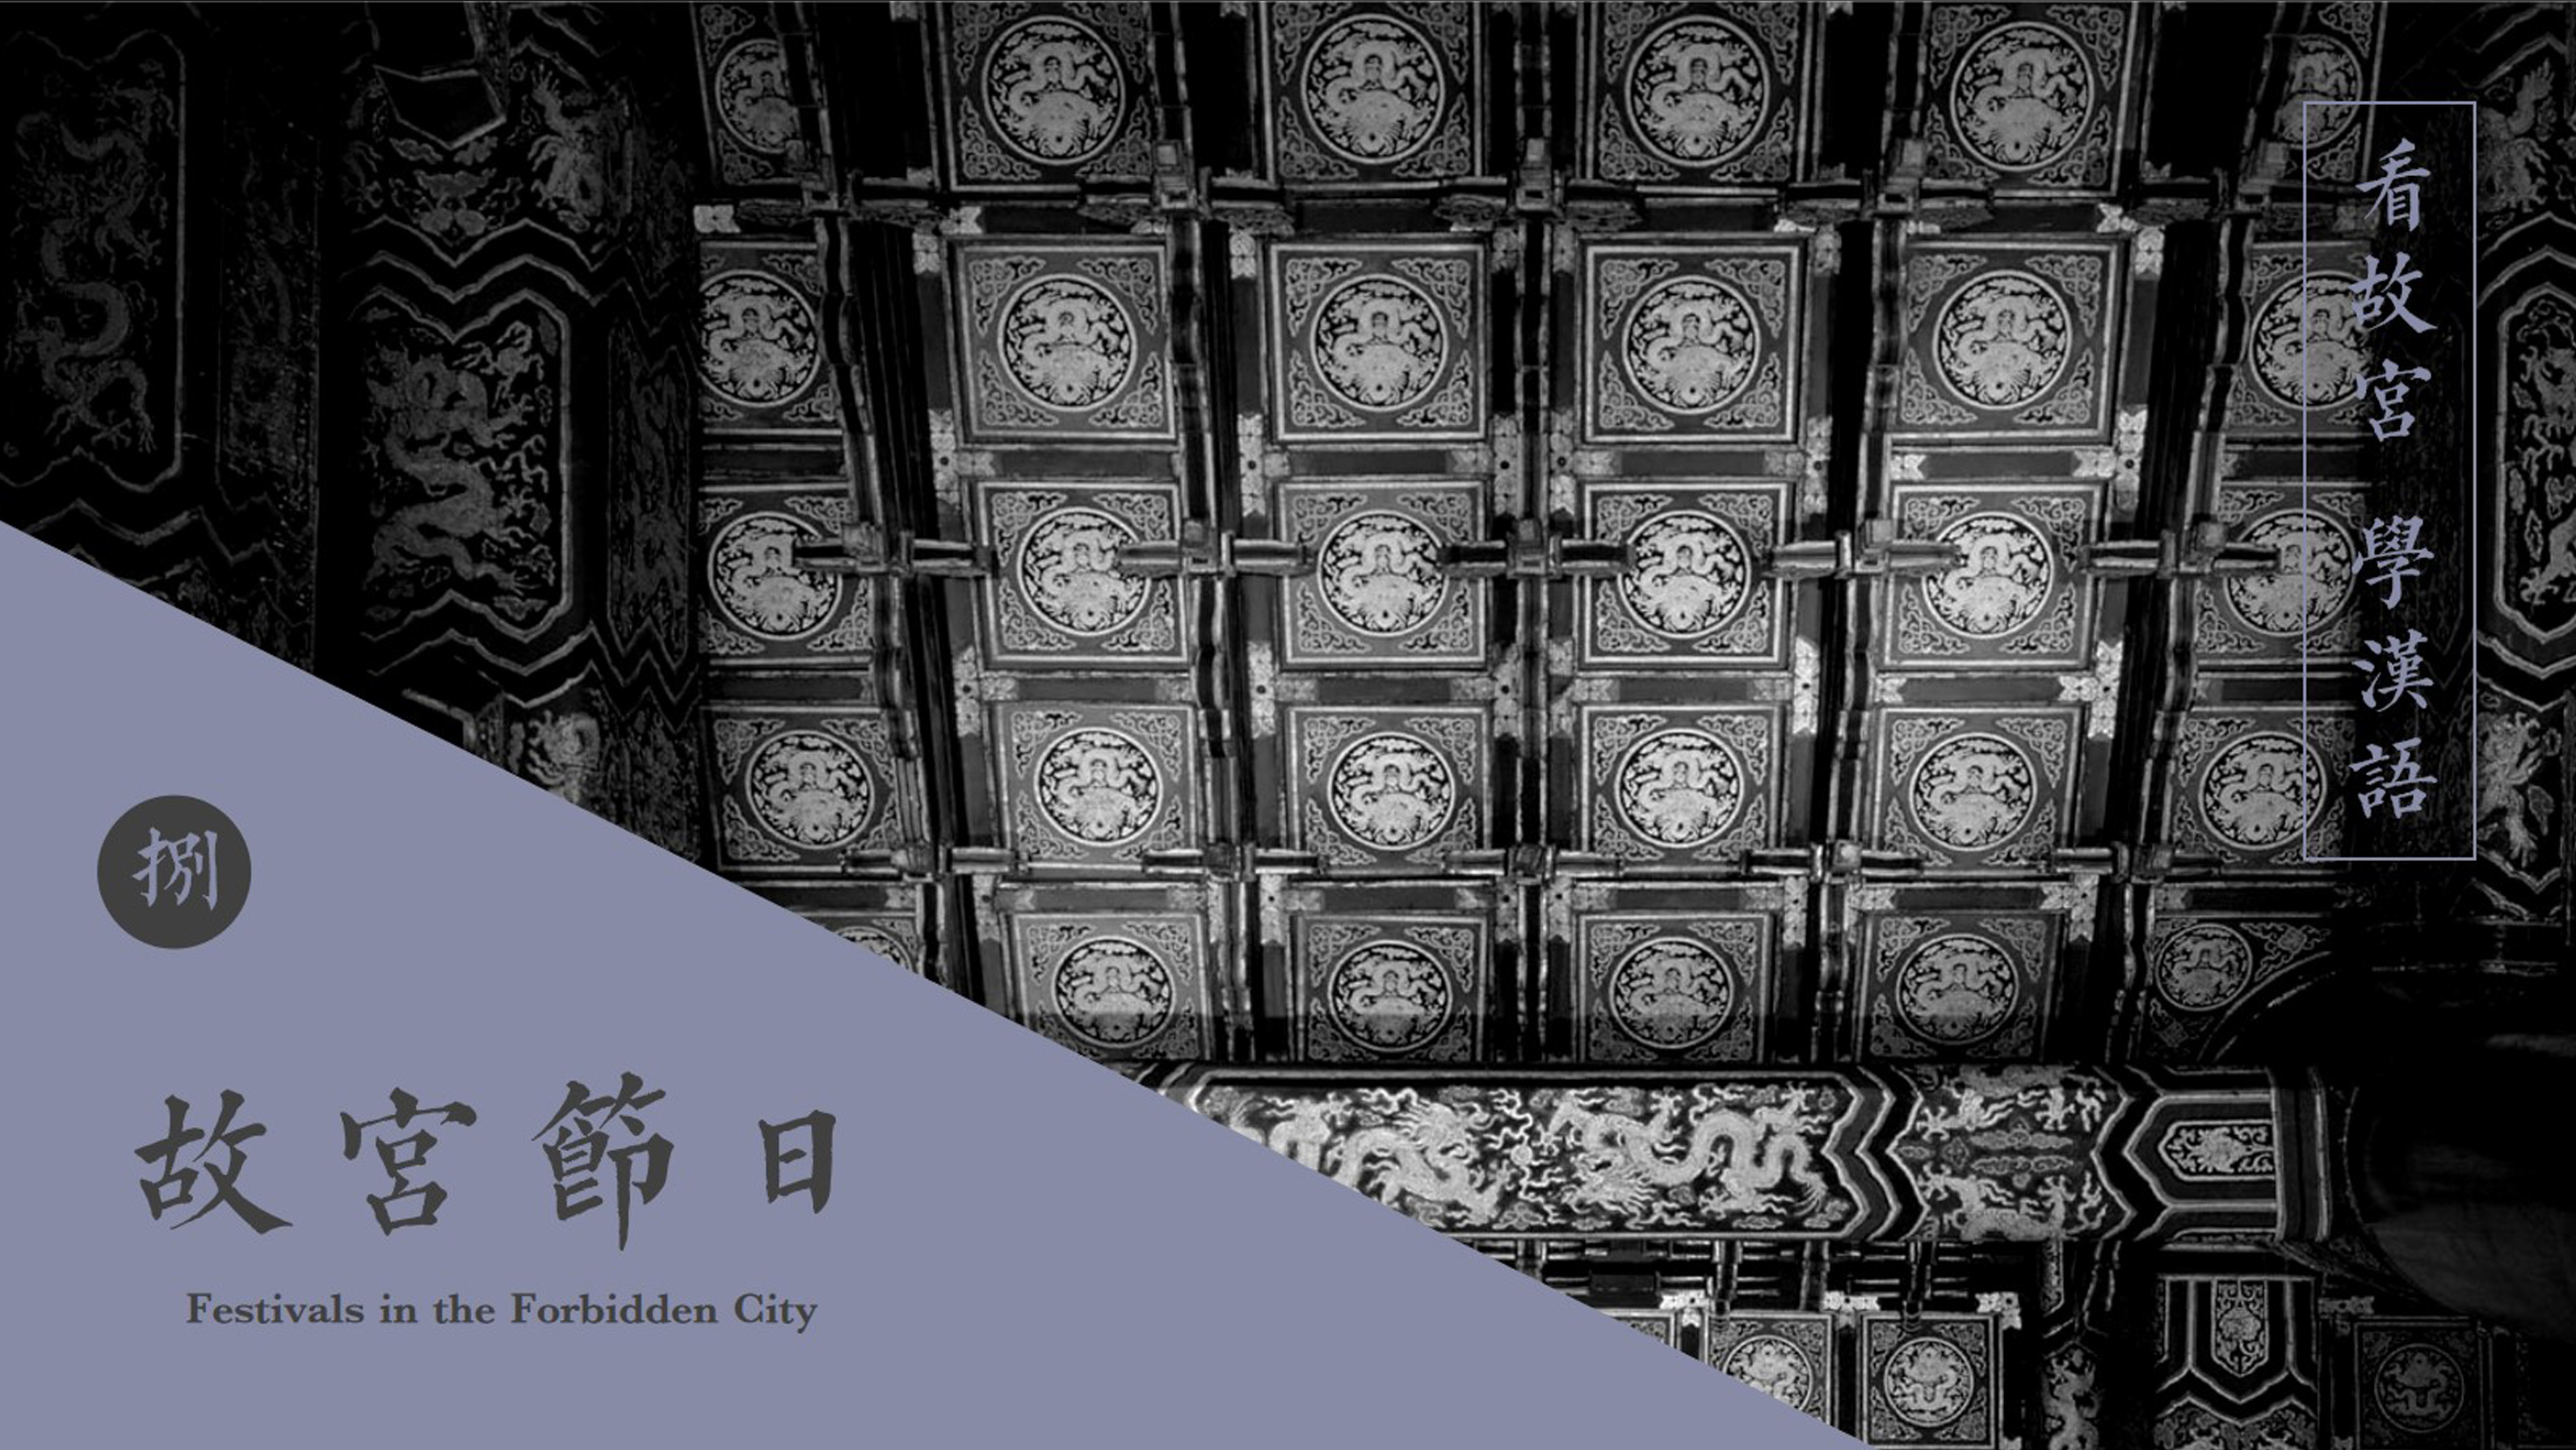 Lecture 8 “The Forbidden City Festivals”